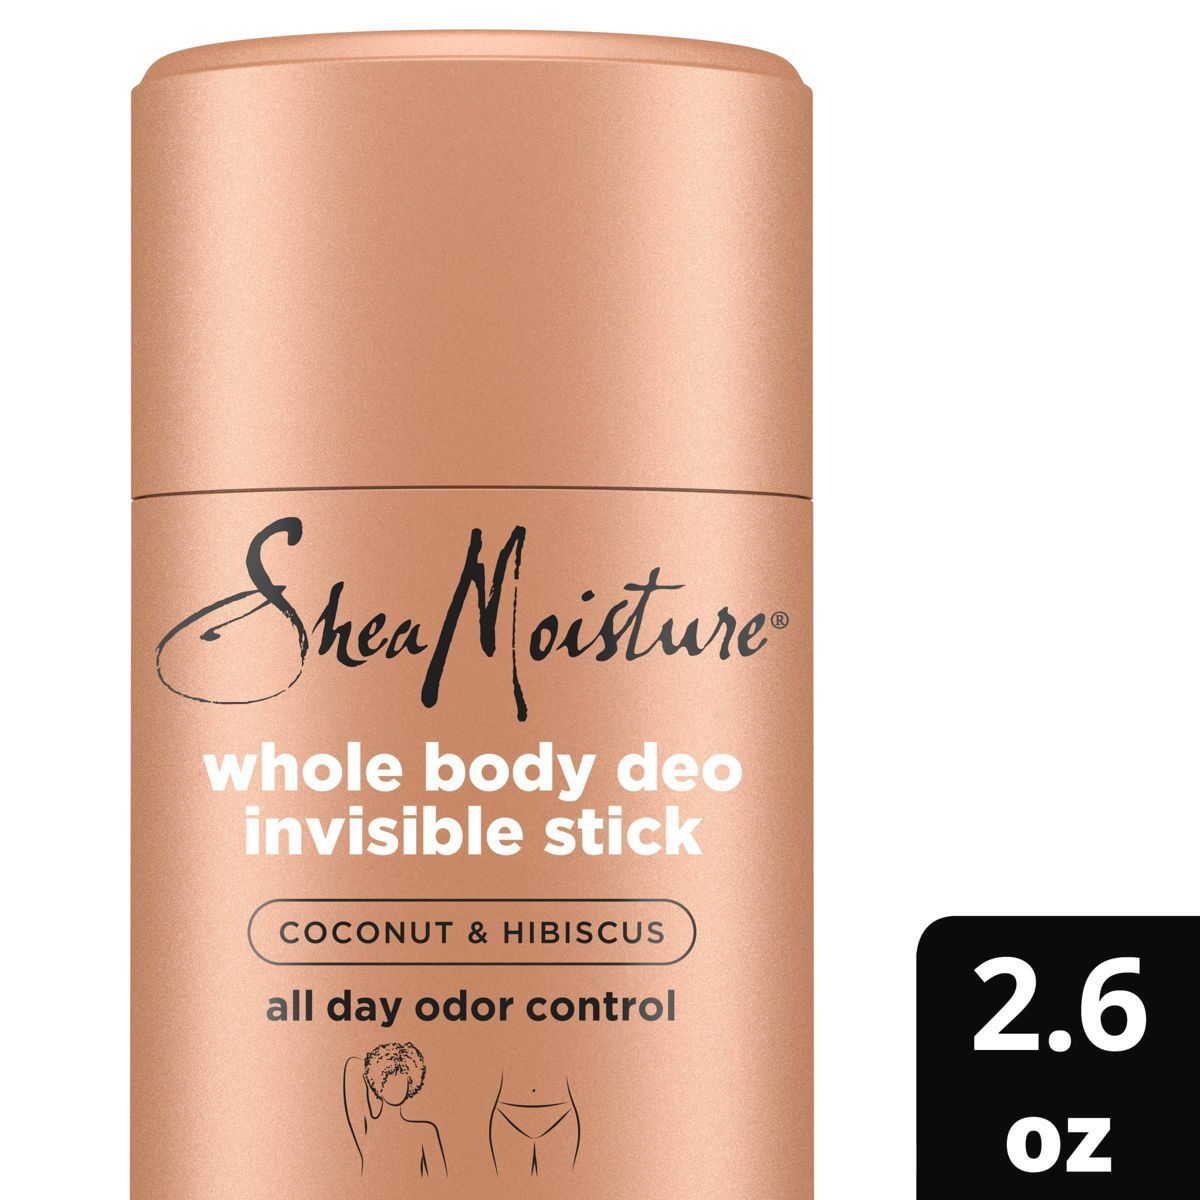 SheaMoisture Coconut & Hibiscus Whole Body Invisible Deodorant Stick - 2.6oz | Target